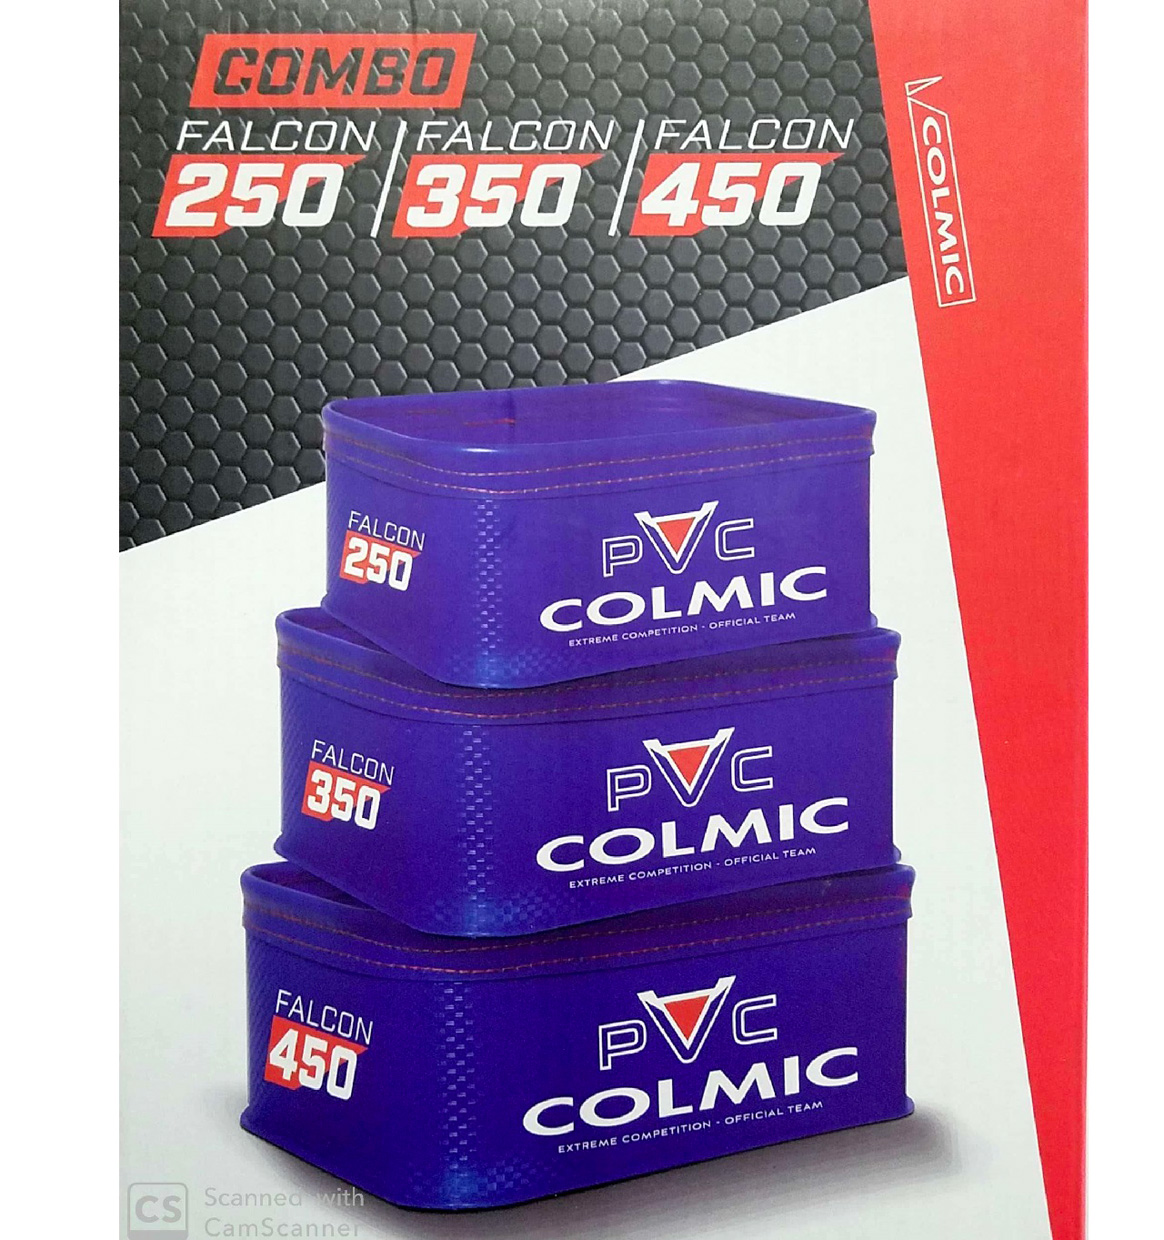 colmic PVC: COMBO FALCON BOXEVA406A.jpg